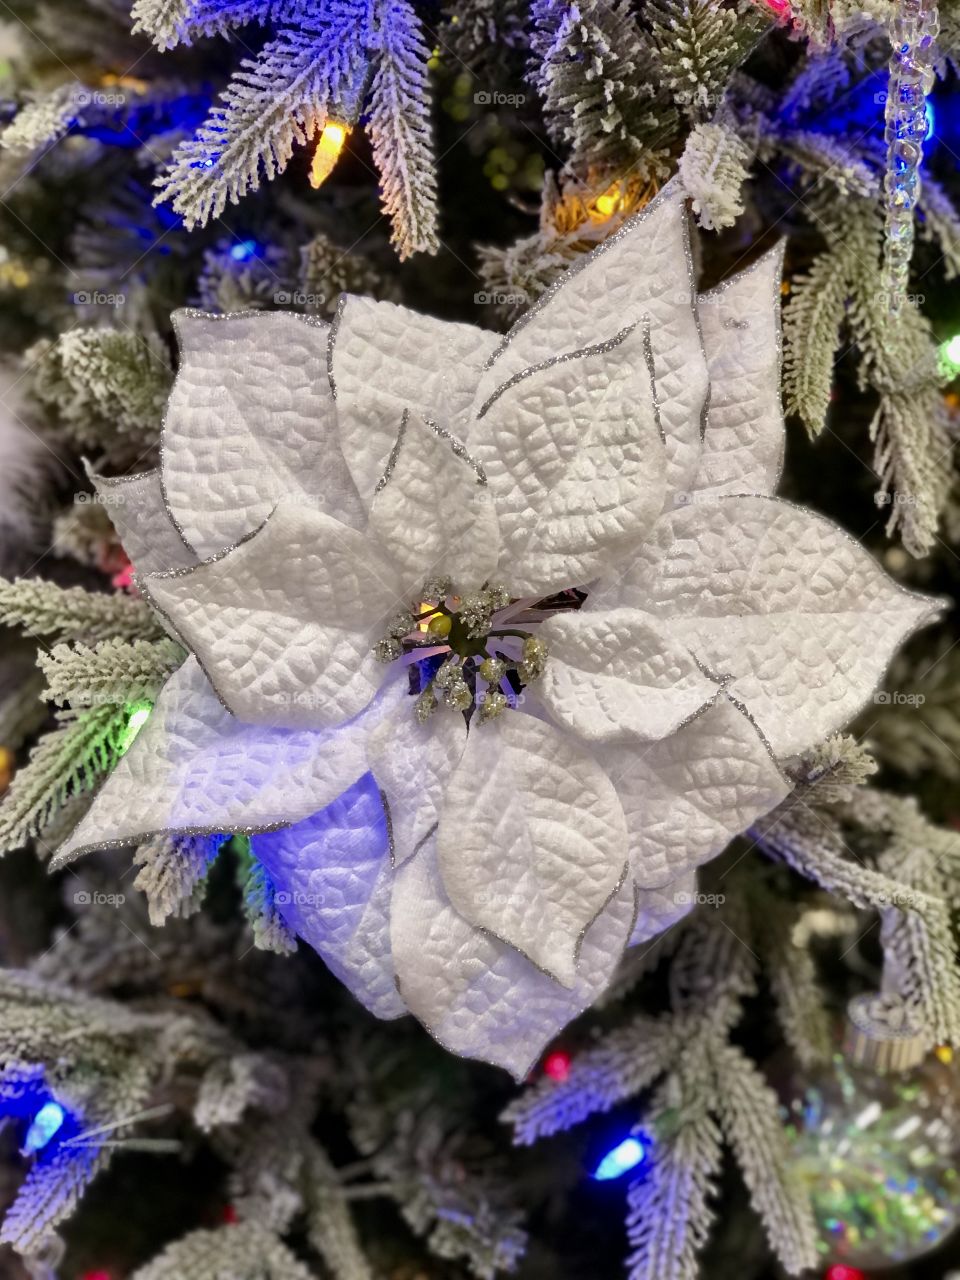 Christmas Tree Ornaments 